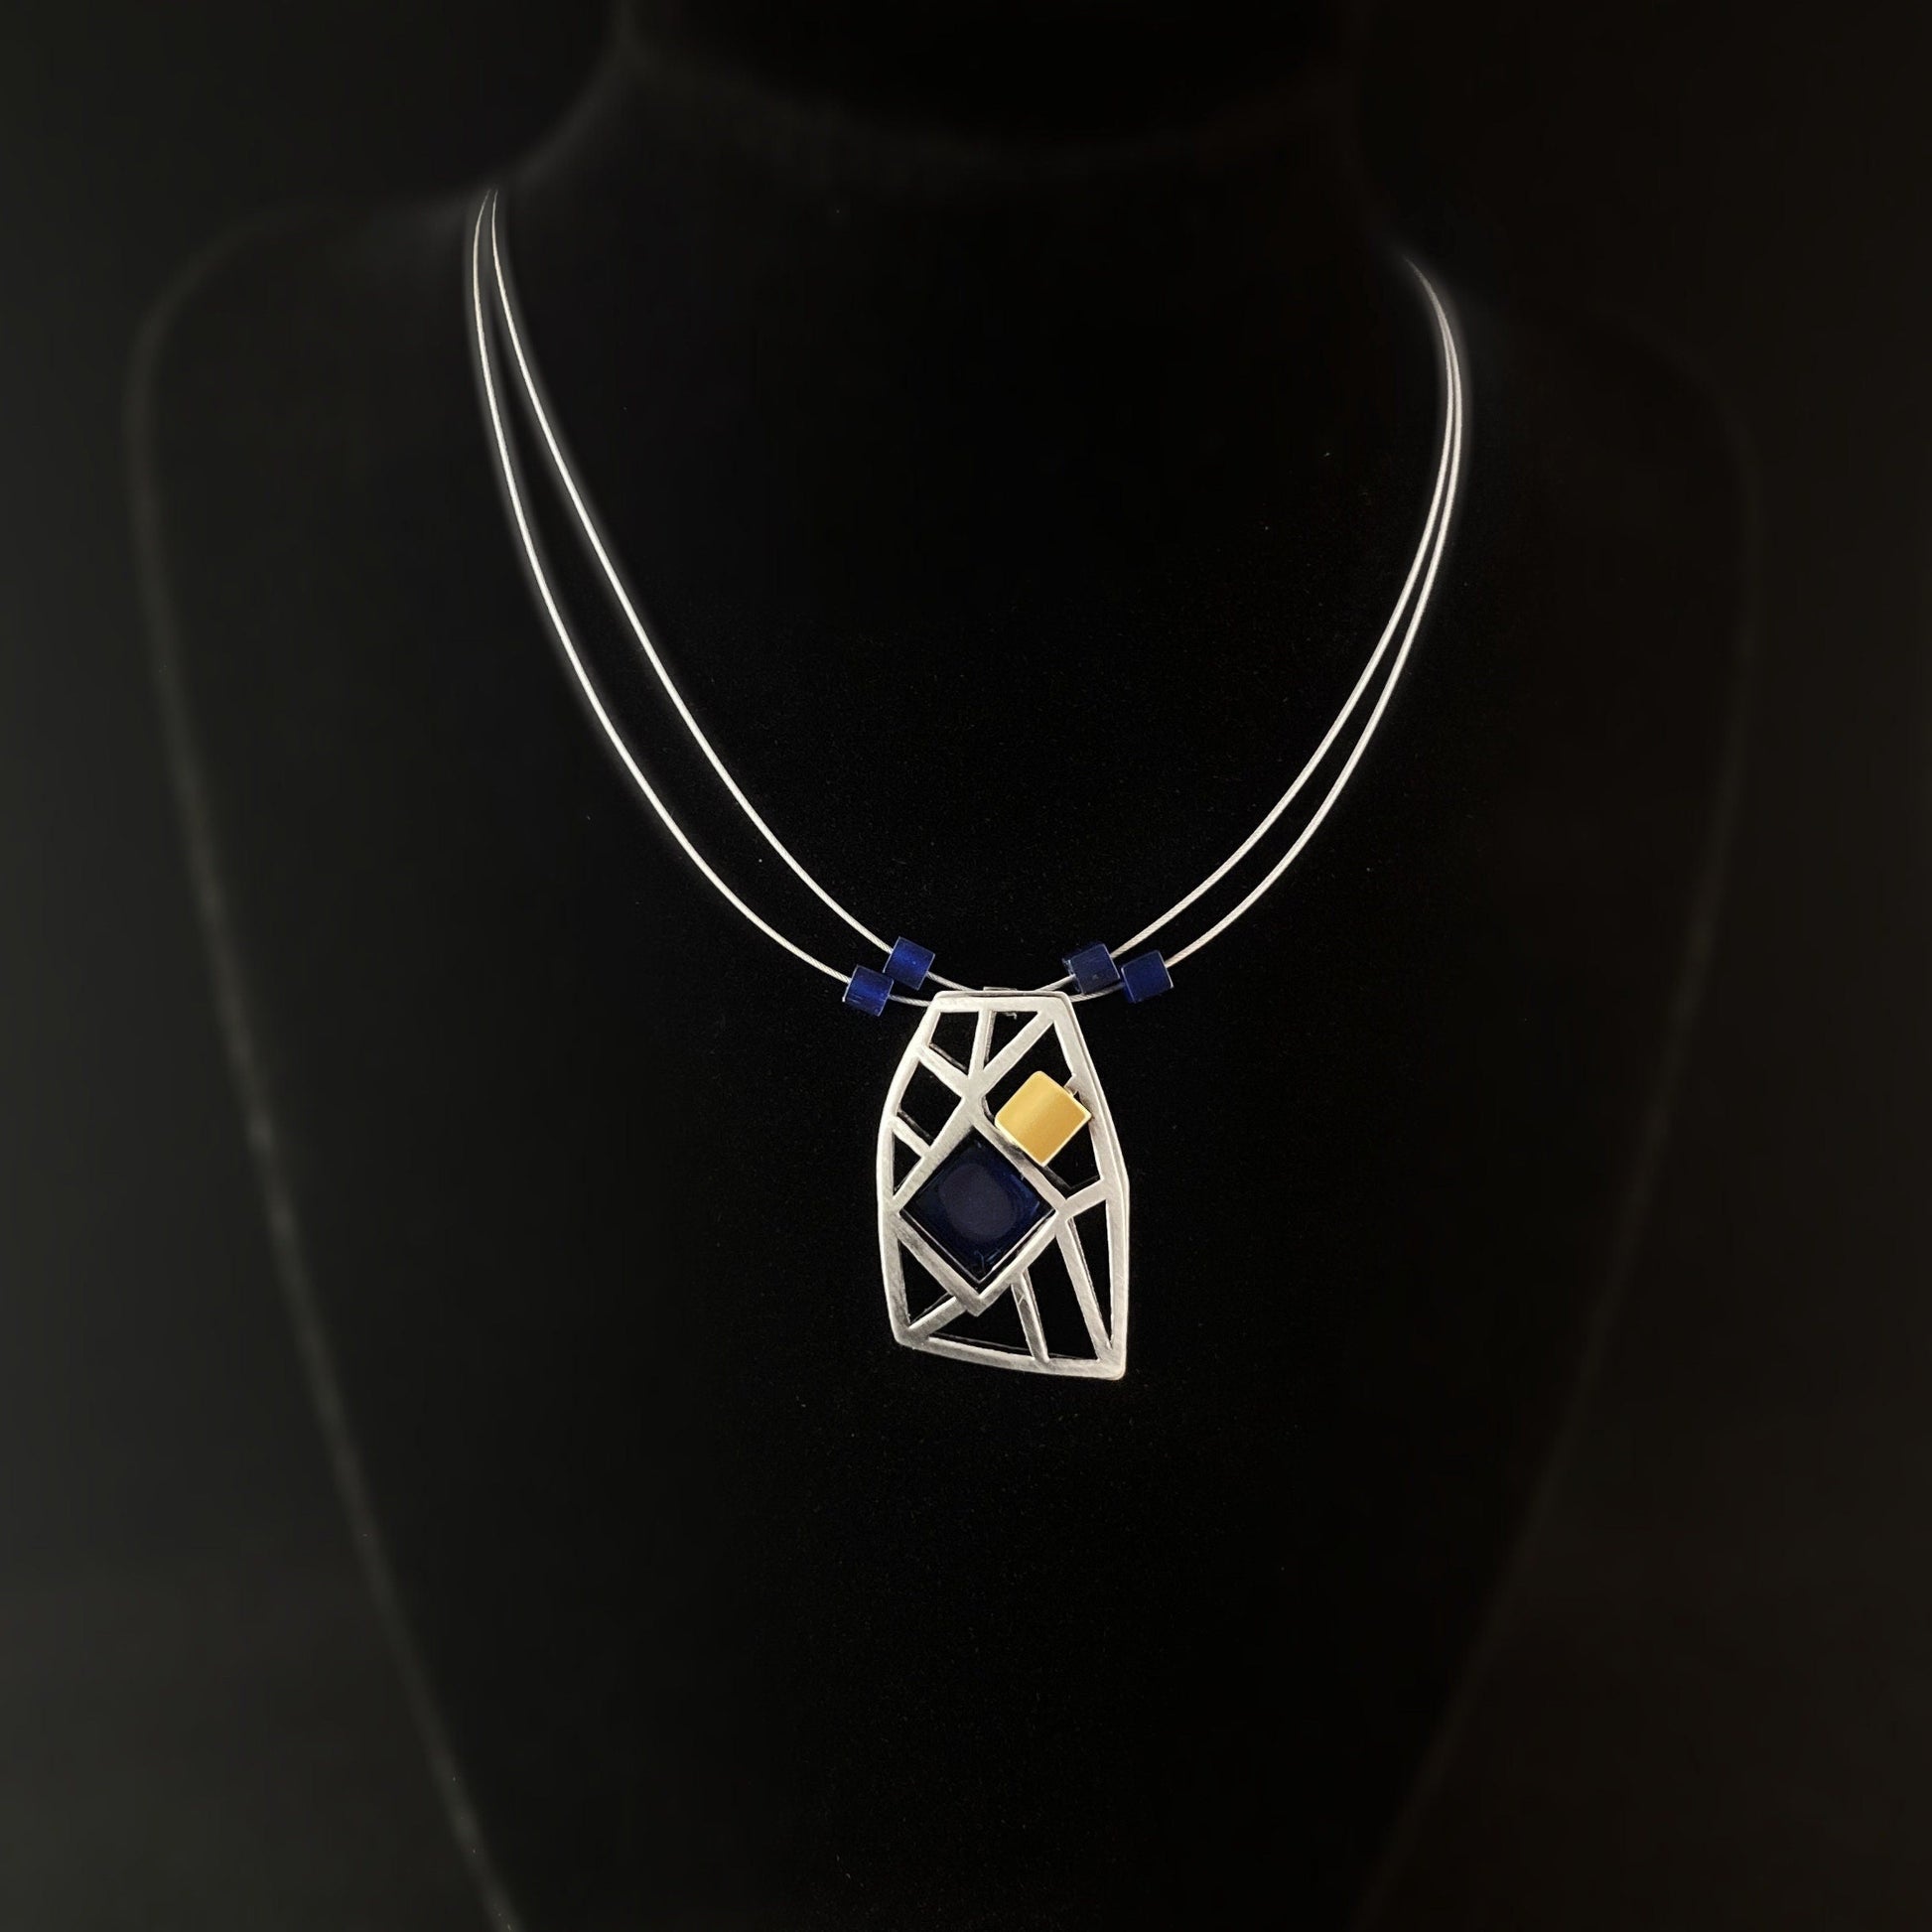 Lightweight Handmade Geometric Aluminum Necklace, Silver and Black Rectangle